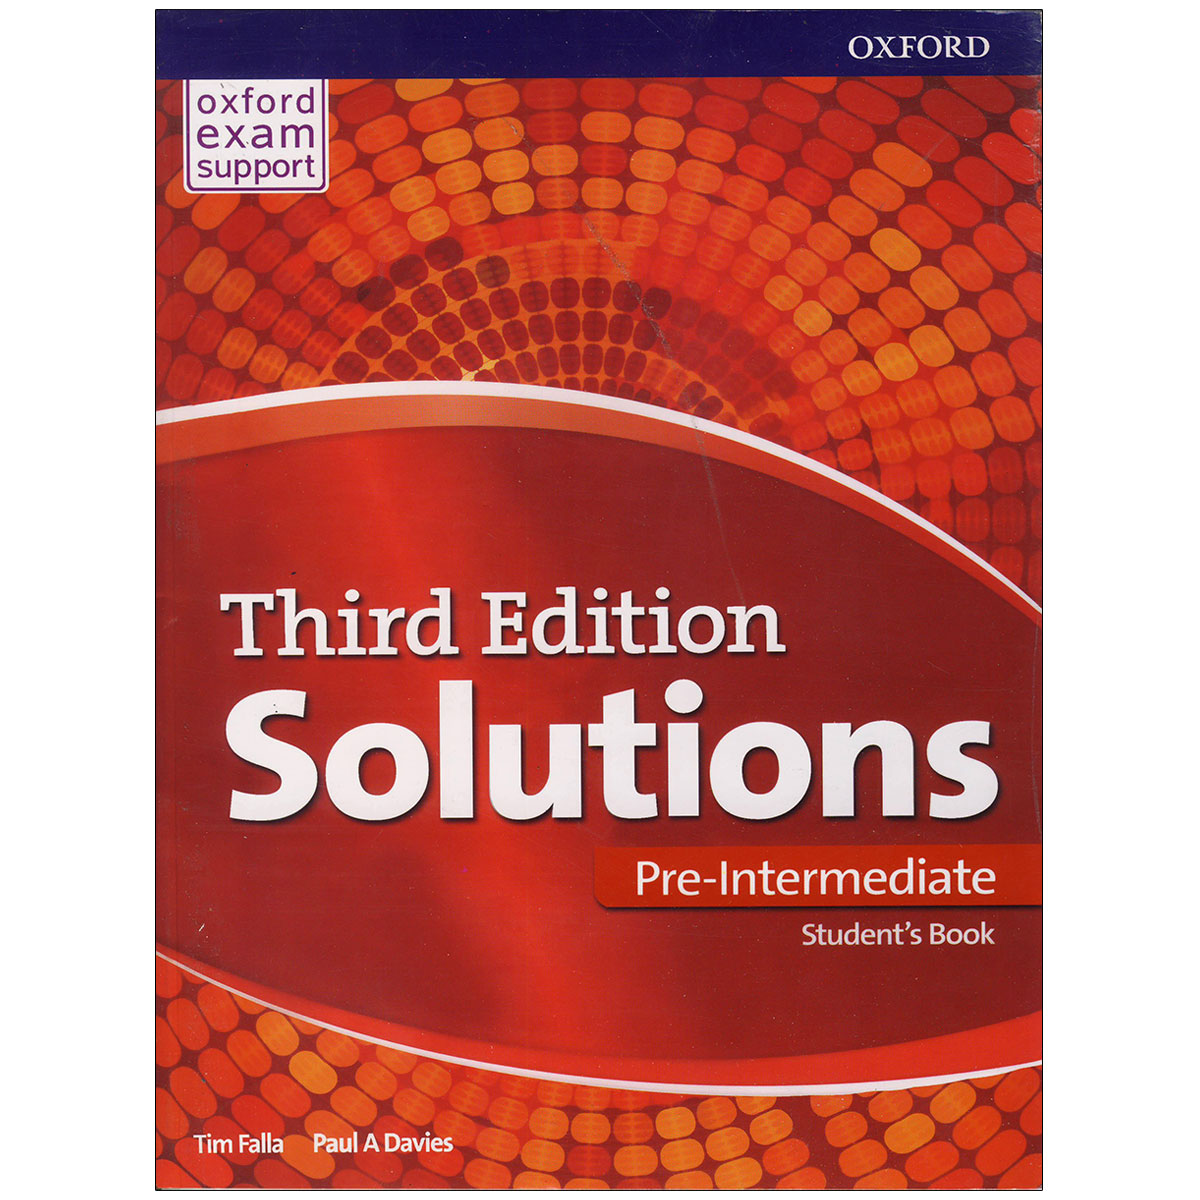 Oxford student s book. Solutions pre-Intermediate 3rd. Third Edition solutions Workbook Oxford. Солюшенс пре интермедиат 3 издание. Pre-Intermediate Intermediate b1.